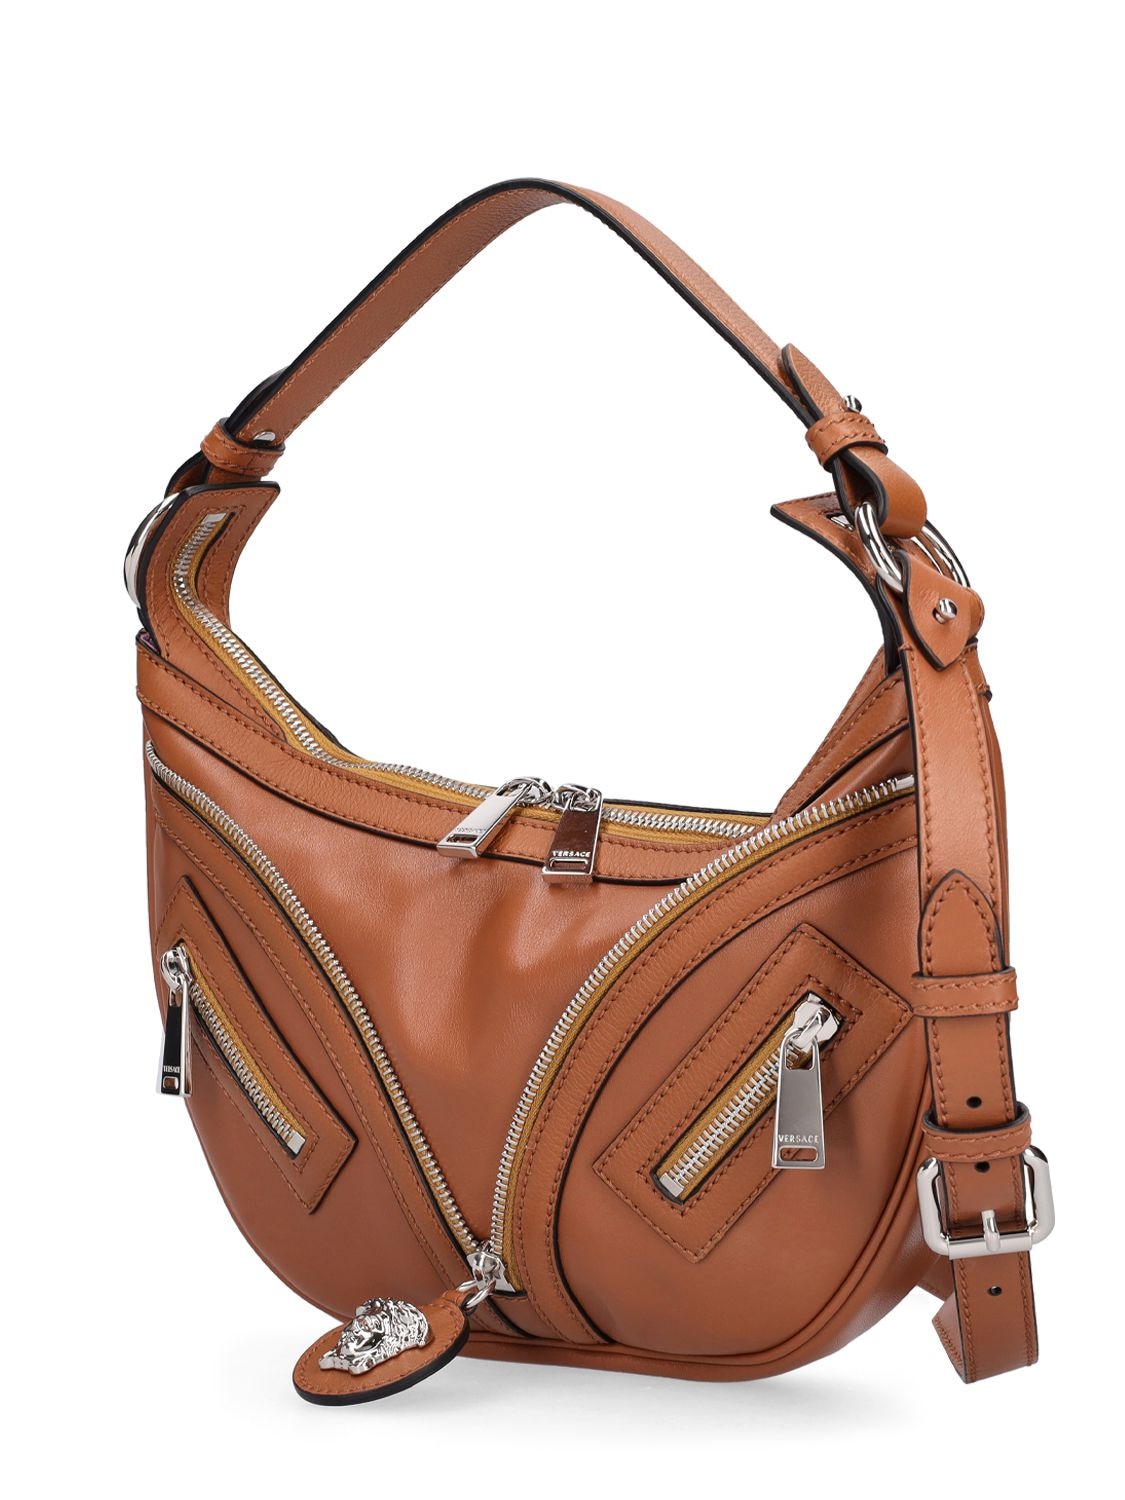 Versace Mini Leather Hobo Bag on SALE